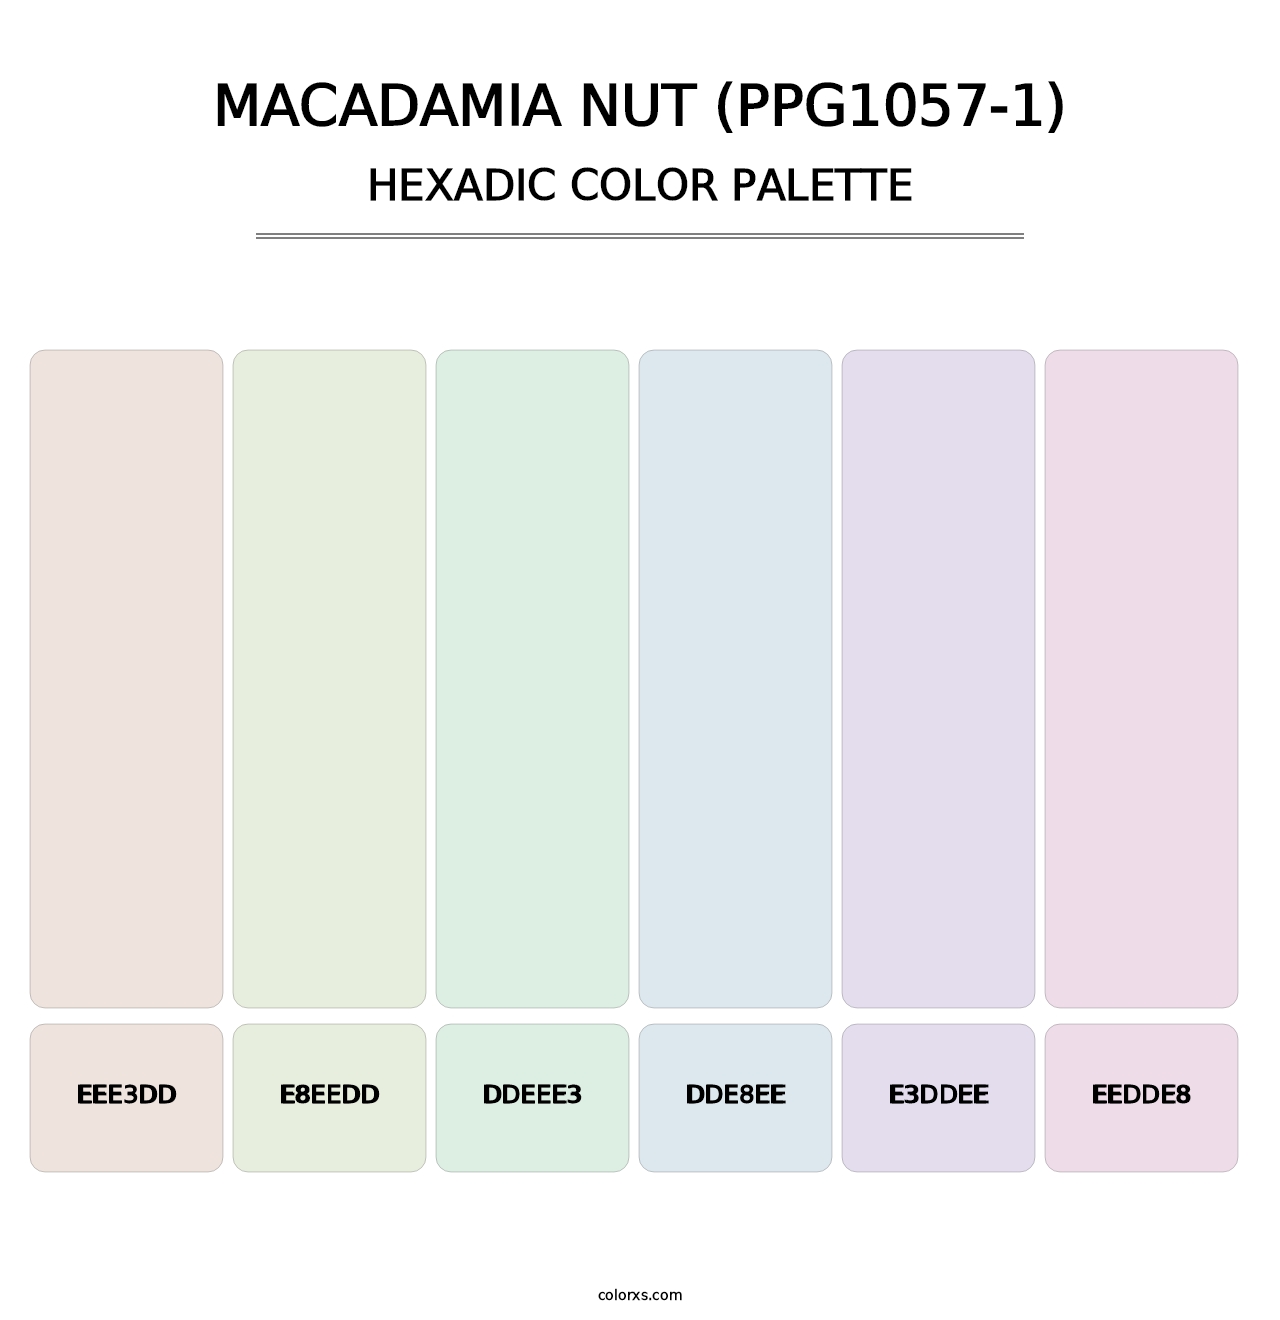 Macadamia Nut (PPG1057-1) - Hexadic Color Palette